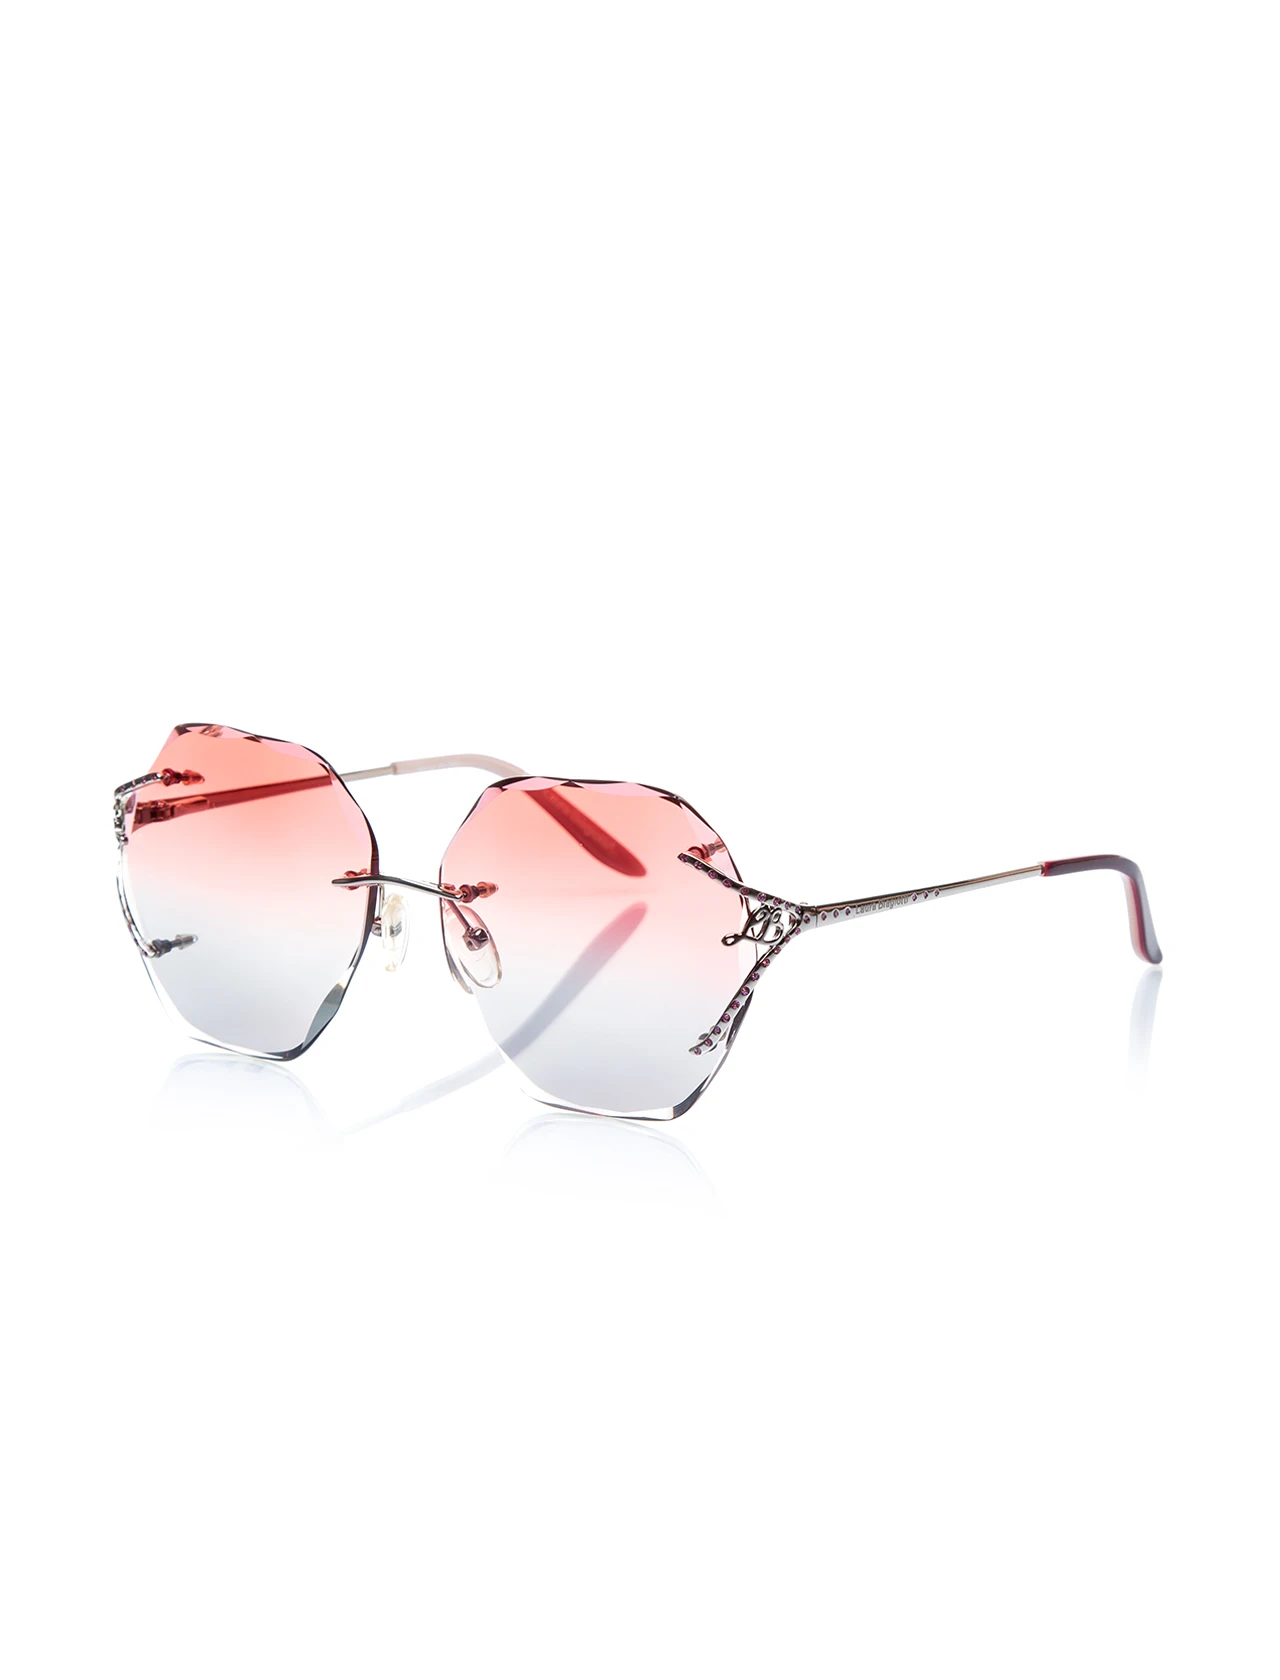 

Women's sunglasses lb 003 p09 c58 metal silver polycarbonate oval aval 58-15-135 laura biagiotti